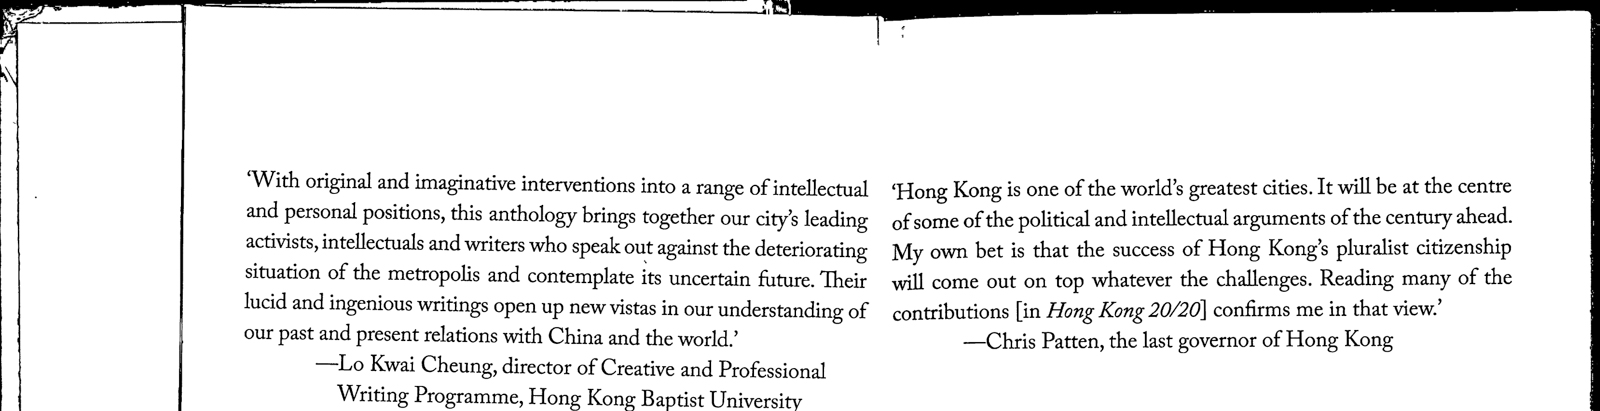 HONG KONG 20 20: Reflections on a borrowed place